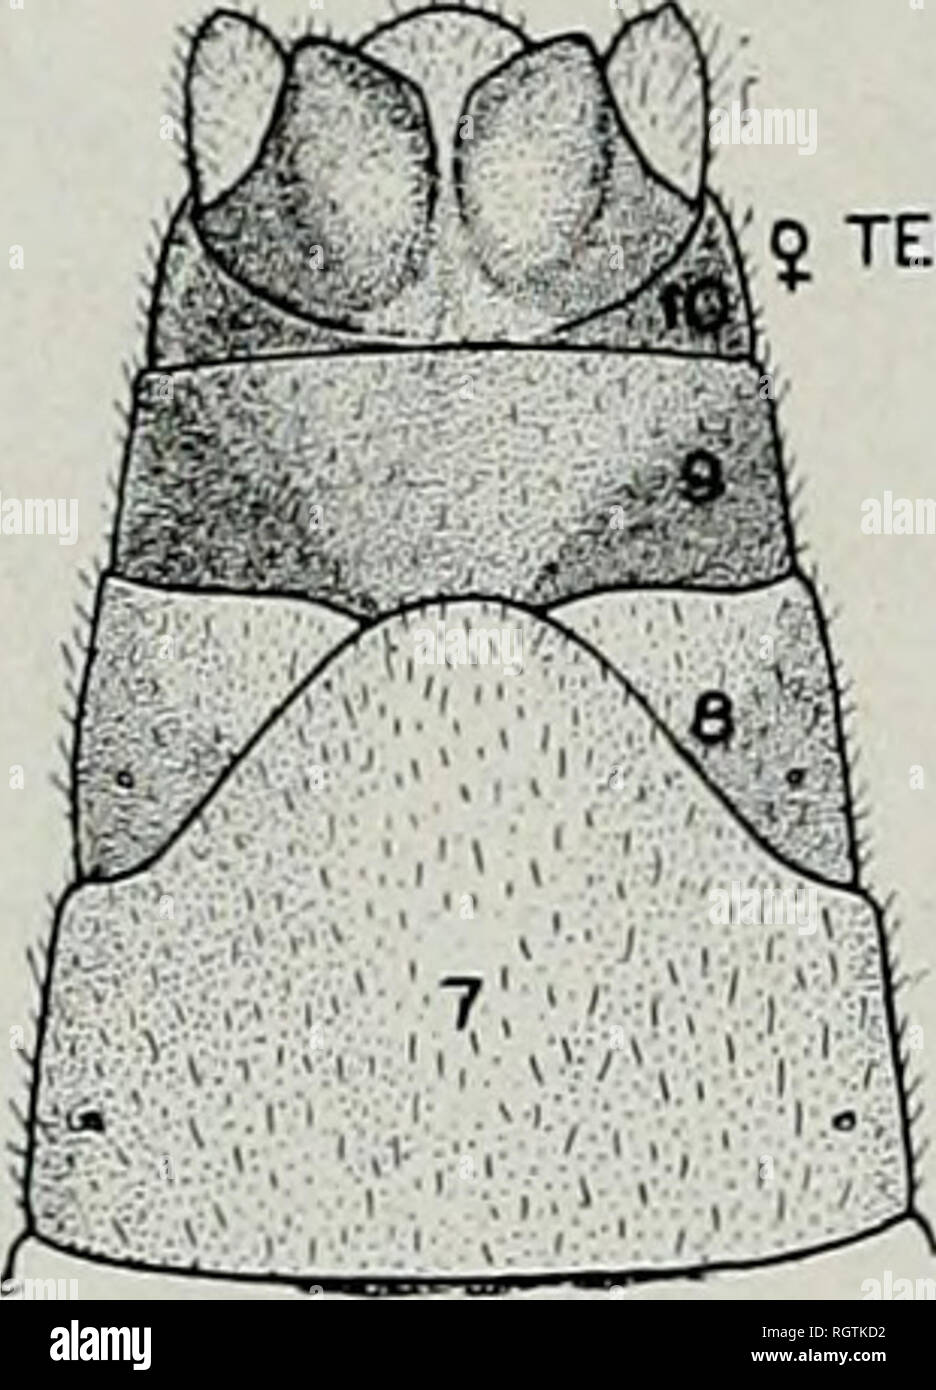 . Bulletin. Natural history; Natural history. Fig. 70.—Neinoio oregoneiisis. margm produced bulblike, over eightn sternite. Four fingerlike gill remnants in ventral cervical region. Allotype, female.—Corvallis, Ore., Oak creek: Apr. 1.^, 1934, E. E. Ball. Oregon.—Corvallis; Apr. 10, 1933, R. E. Dimick, 19; Apr. 16, 1931, Itf'; Dixon creek, March 10, 1935, R. E. Dimick, &amp;; Oak creek, March 18, 1934, R. V. Prentiss, 19, and March 31, 1934, E. K. Ball, IcT, and Apr. 7, 1934, E. E. Ball, 19. Benton county. Woods creek: Apr. 11, 1936, R. E. Rieder, &lt;f cf, 99. Nemoura tuberculata—new specie Stock Photo